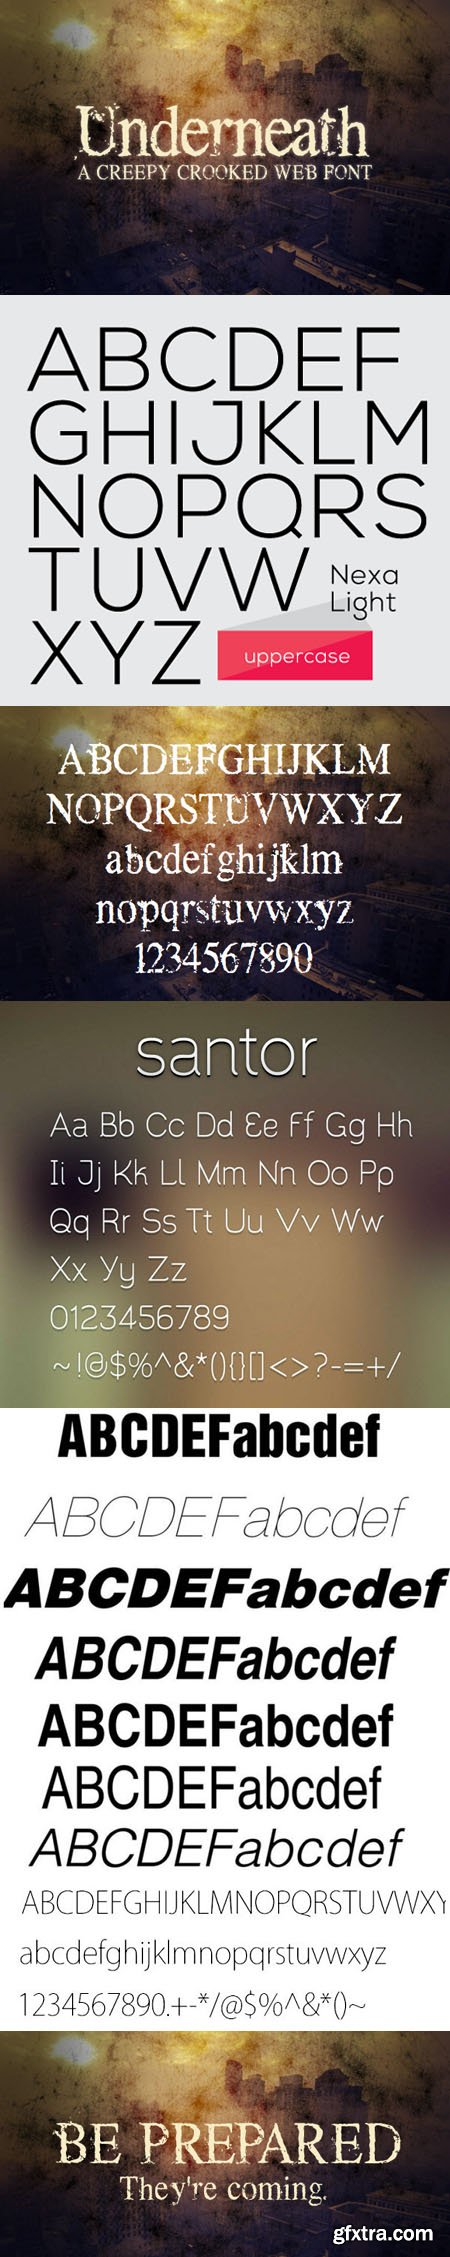 Collection of 5 Fonts Bundles (TTF/OTF)